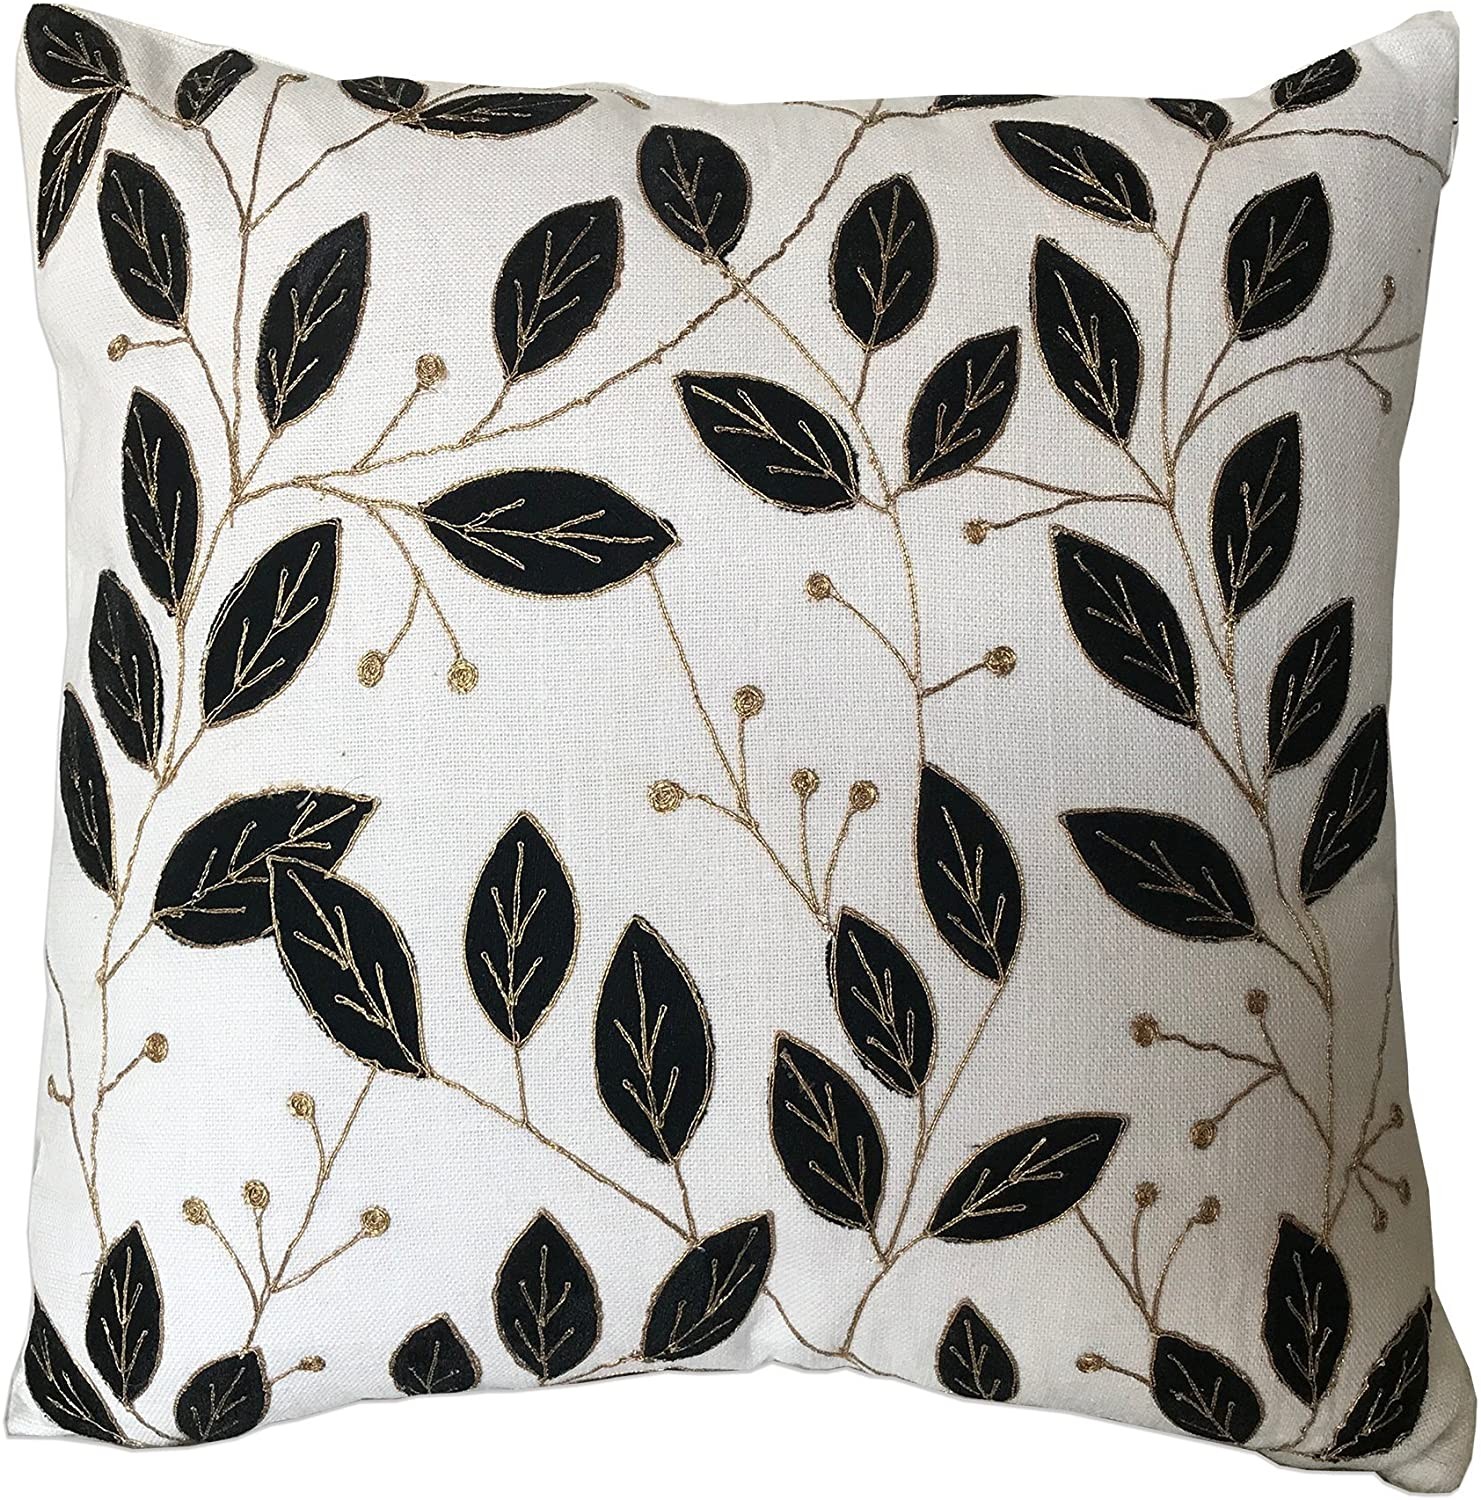 https://www.decorshore.com/1447/zara-18-inch-artisan-crafted-decorative-throw-pillow-cushion-cover-white-cotton-jute-leaf-pattern.jpg